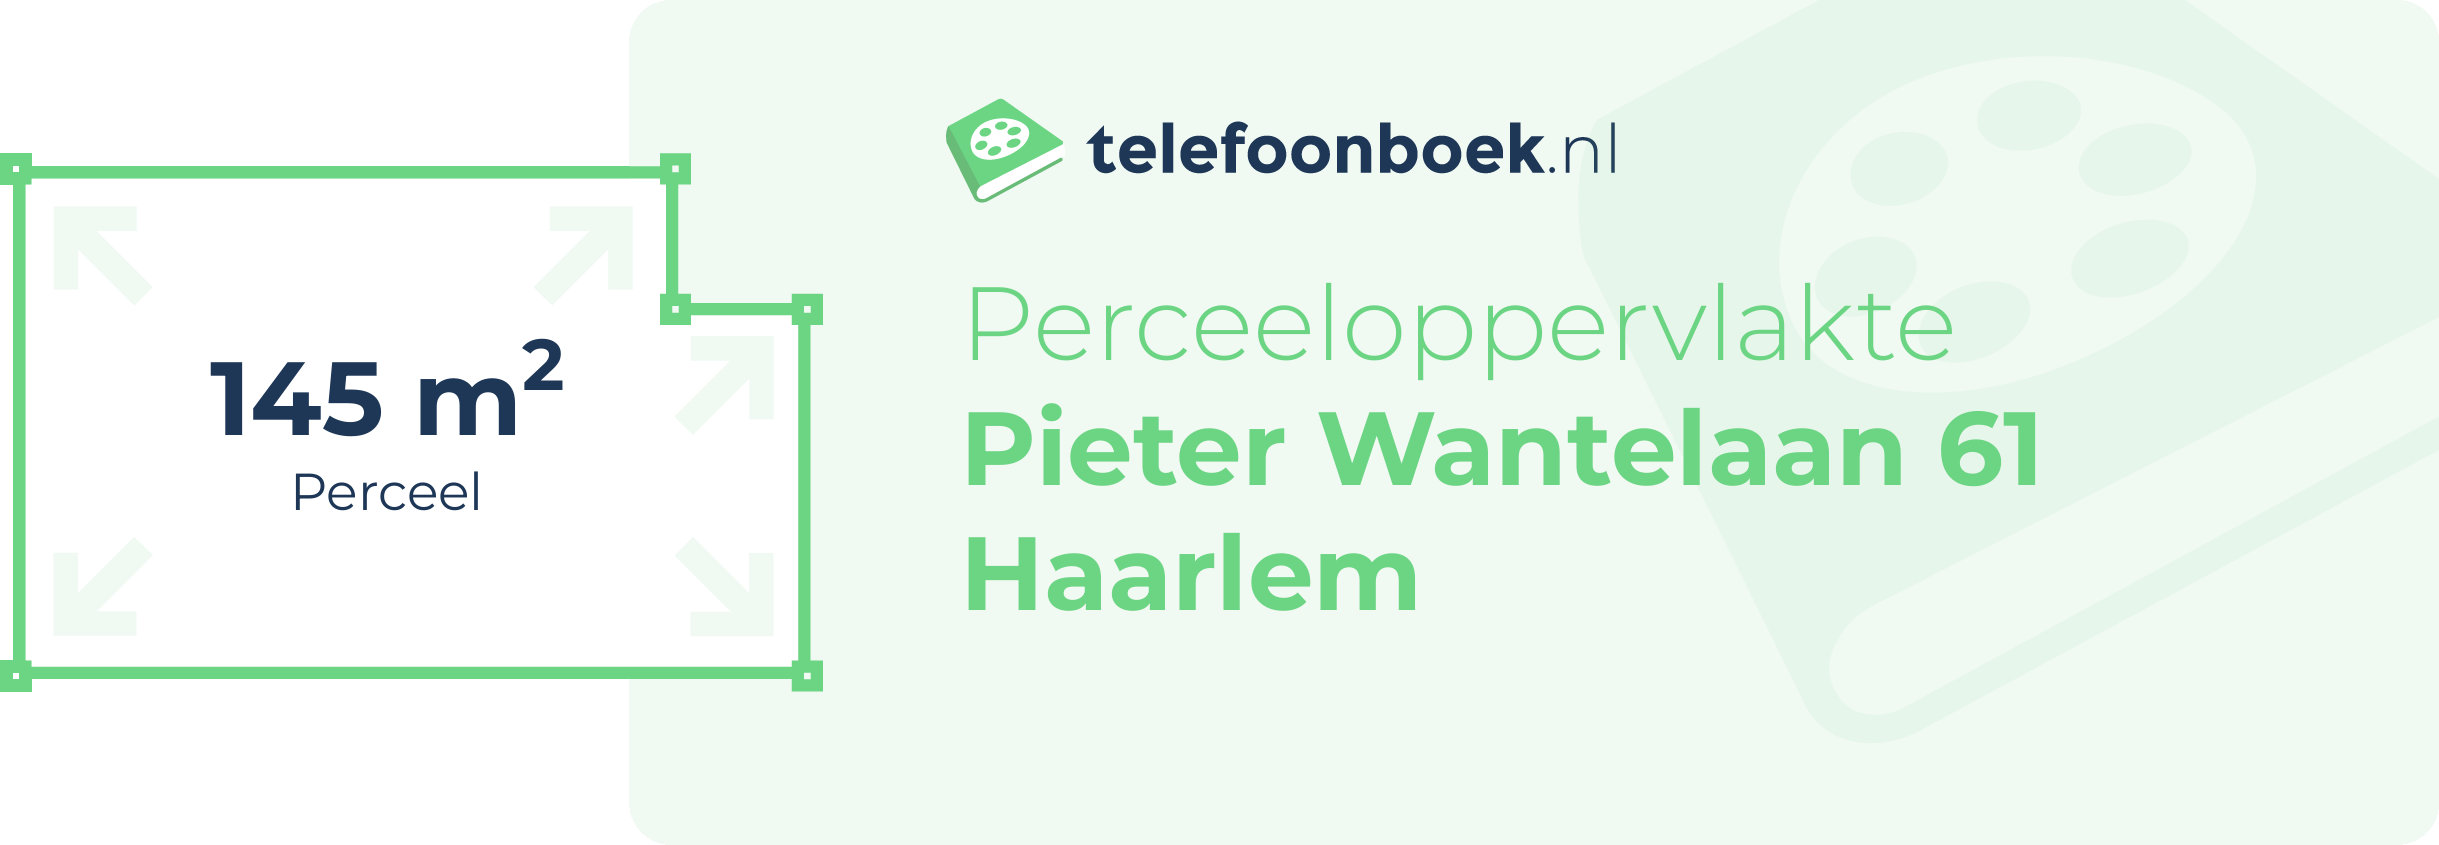 Perceeloppervlakte Pieter Wantelaan 61 Haarlem